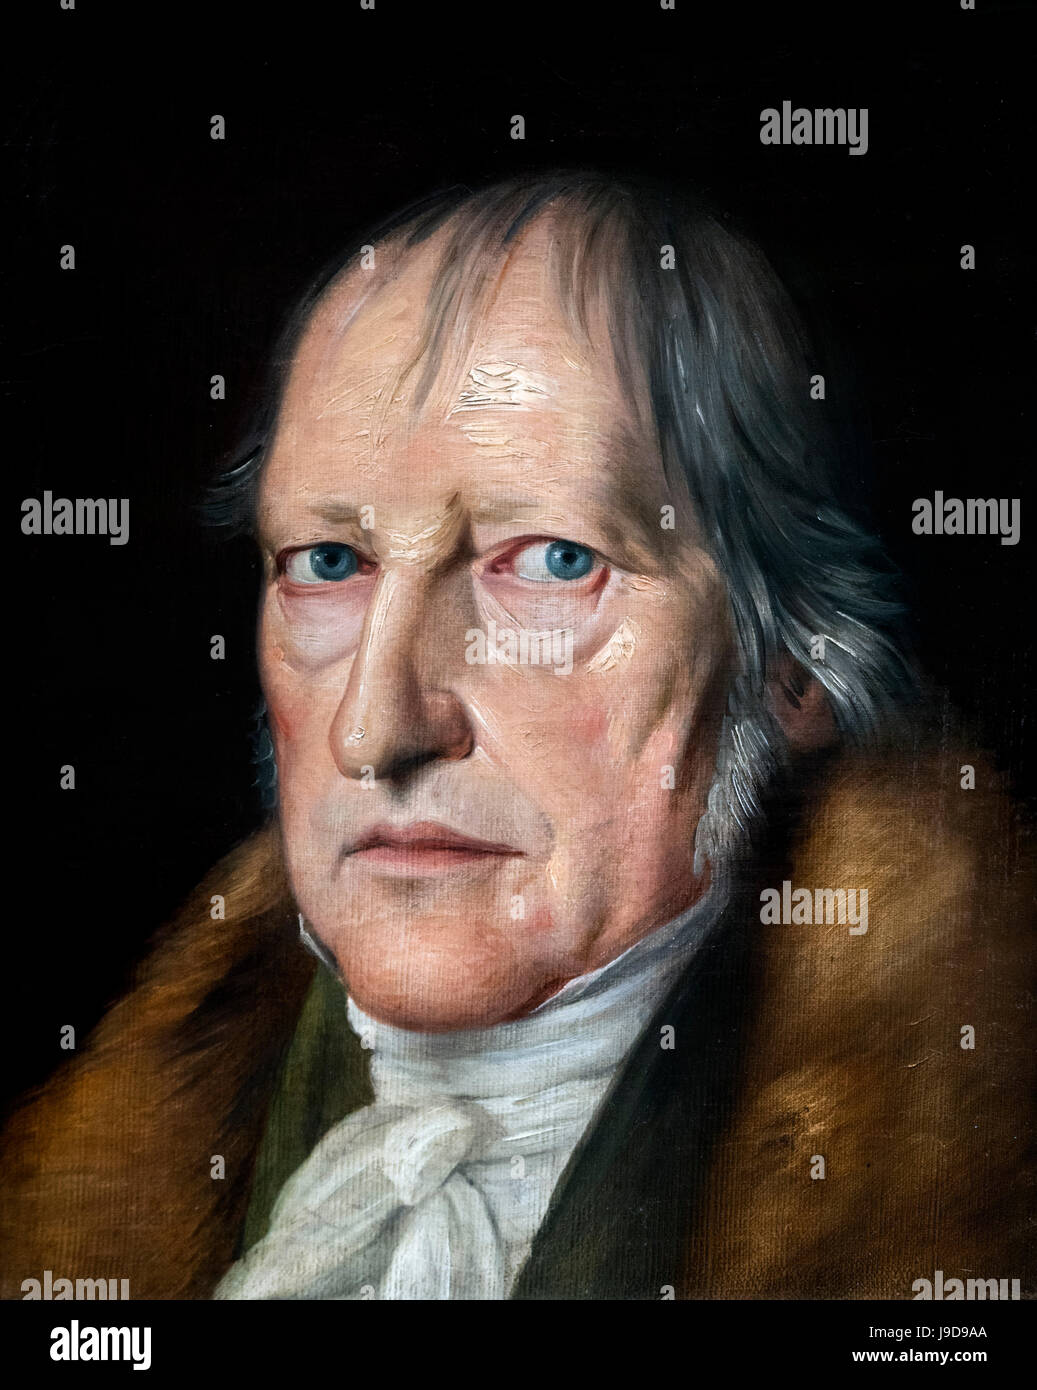 Hegel. Ritratto del filosofo tedesco Georg Wilhelm Friedrich Hegel (1770-1831) da Jacob Schlessinger, olio su tela, 1831. Foto Stock